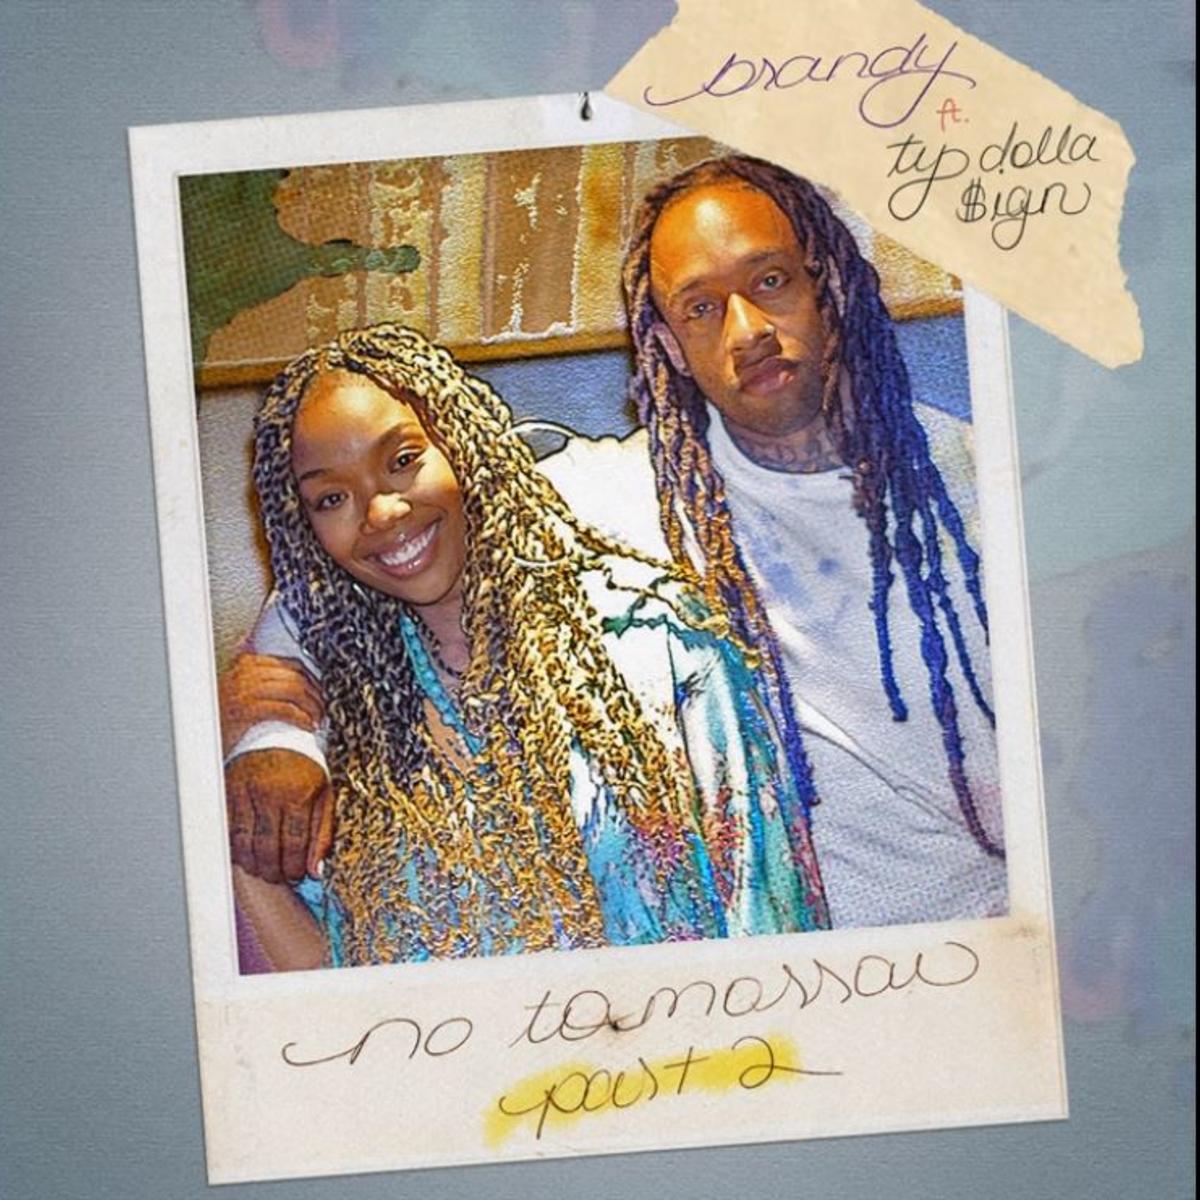 Ty Dolla $ign Hops On Brandy’s “No Tomorrow” Remix